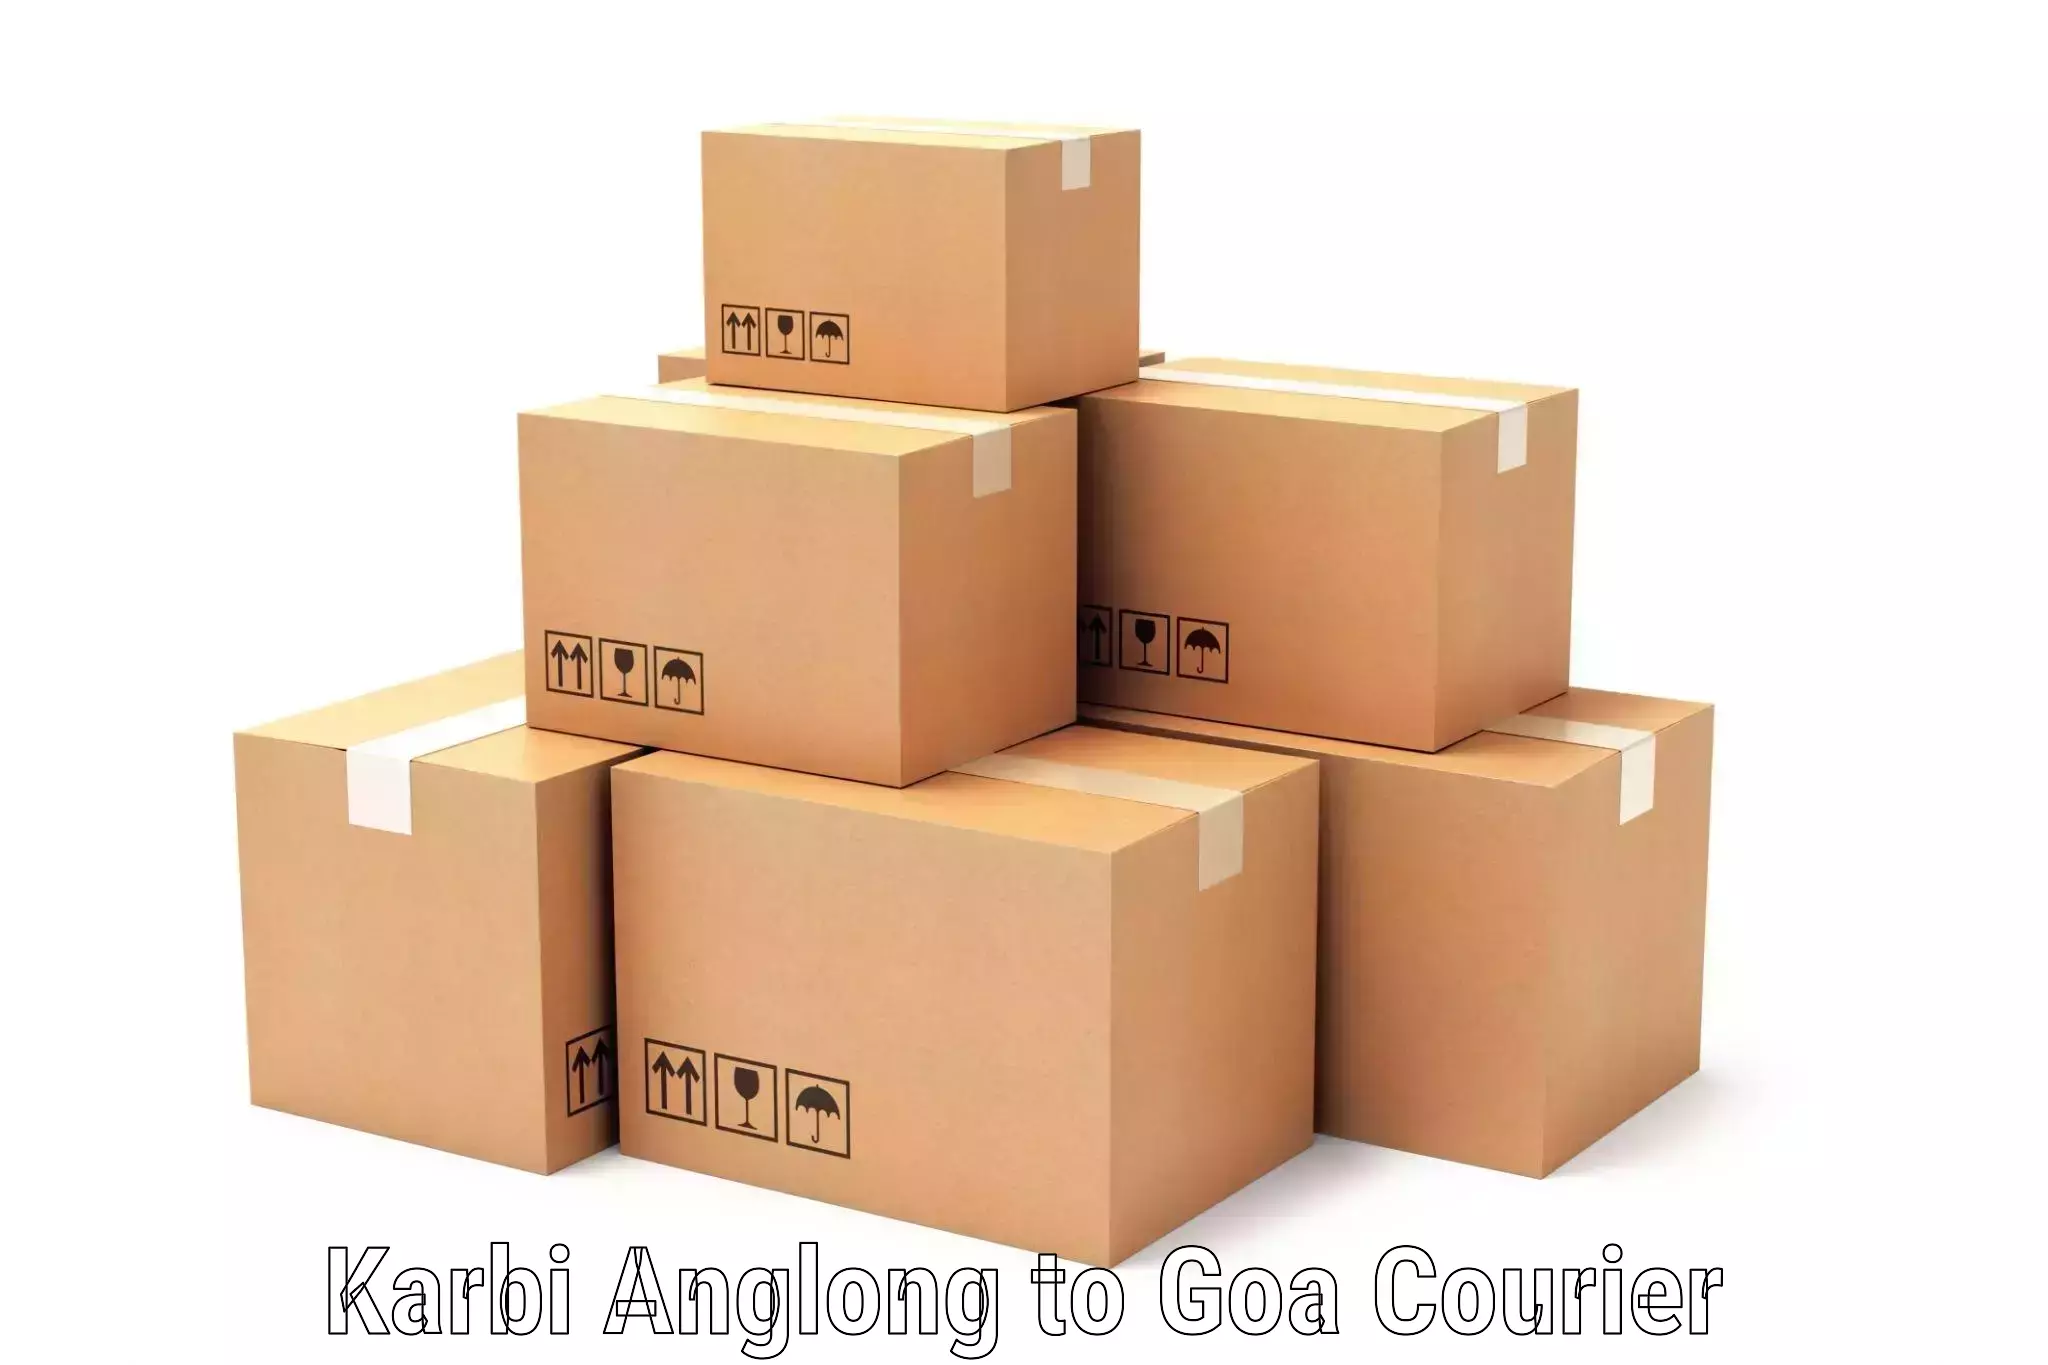 Logistics service provider Karbi Anglong to Goa